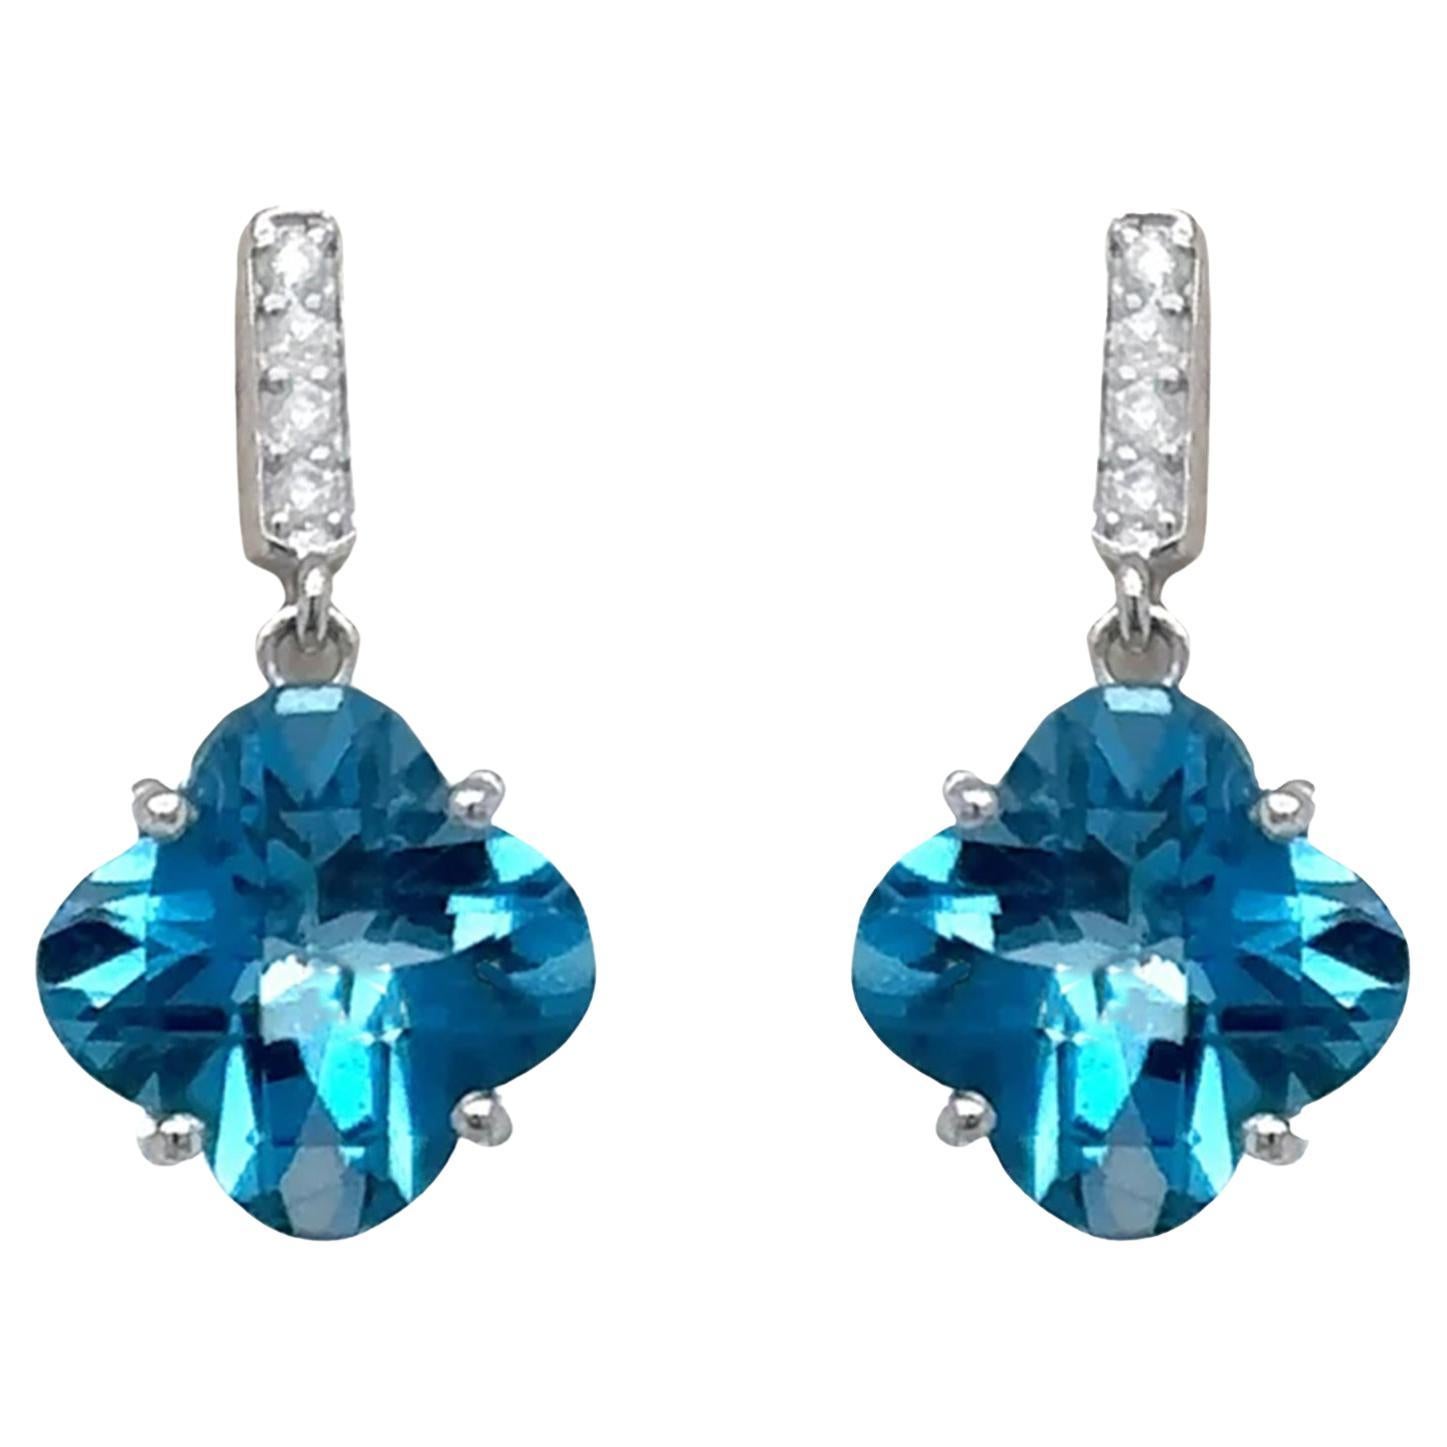 Blue Topaz Dangle Earrings With Diamonds 5.48 Carats 18K White Gold